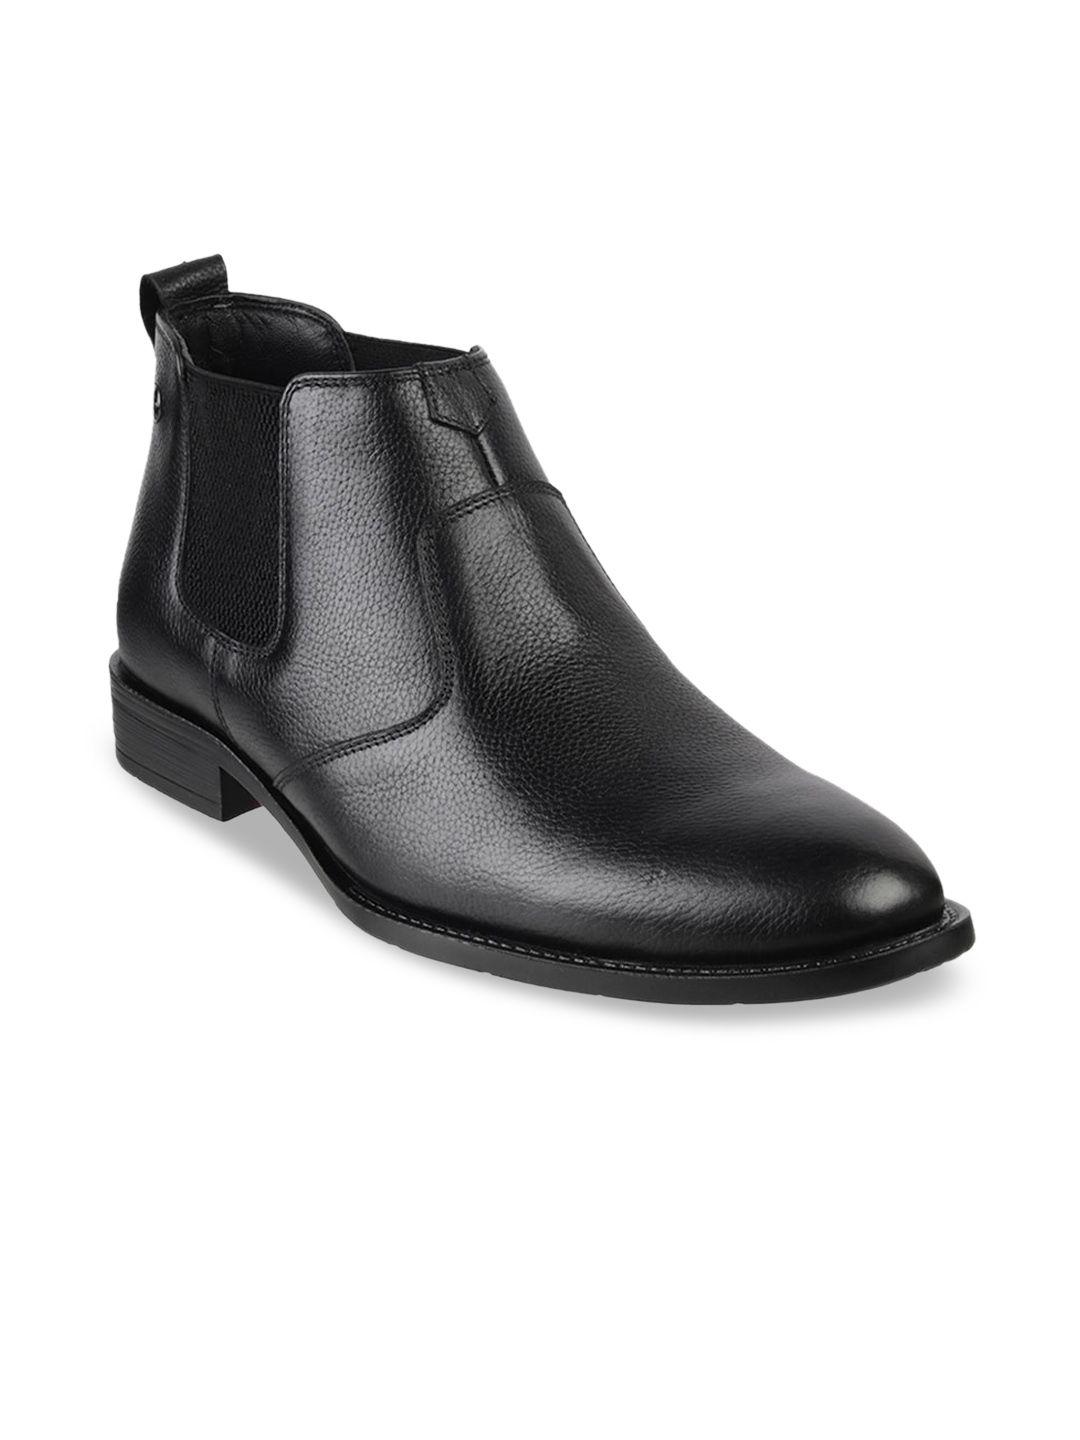 mochi men black solid leather boots